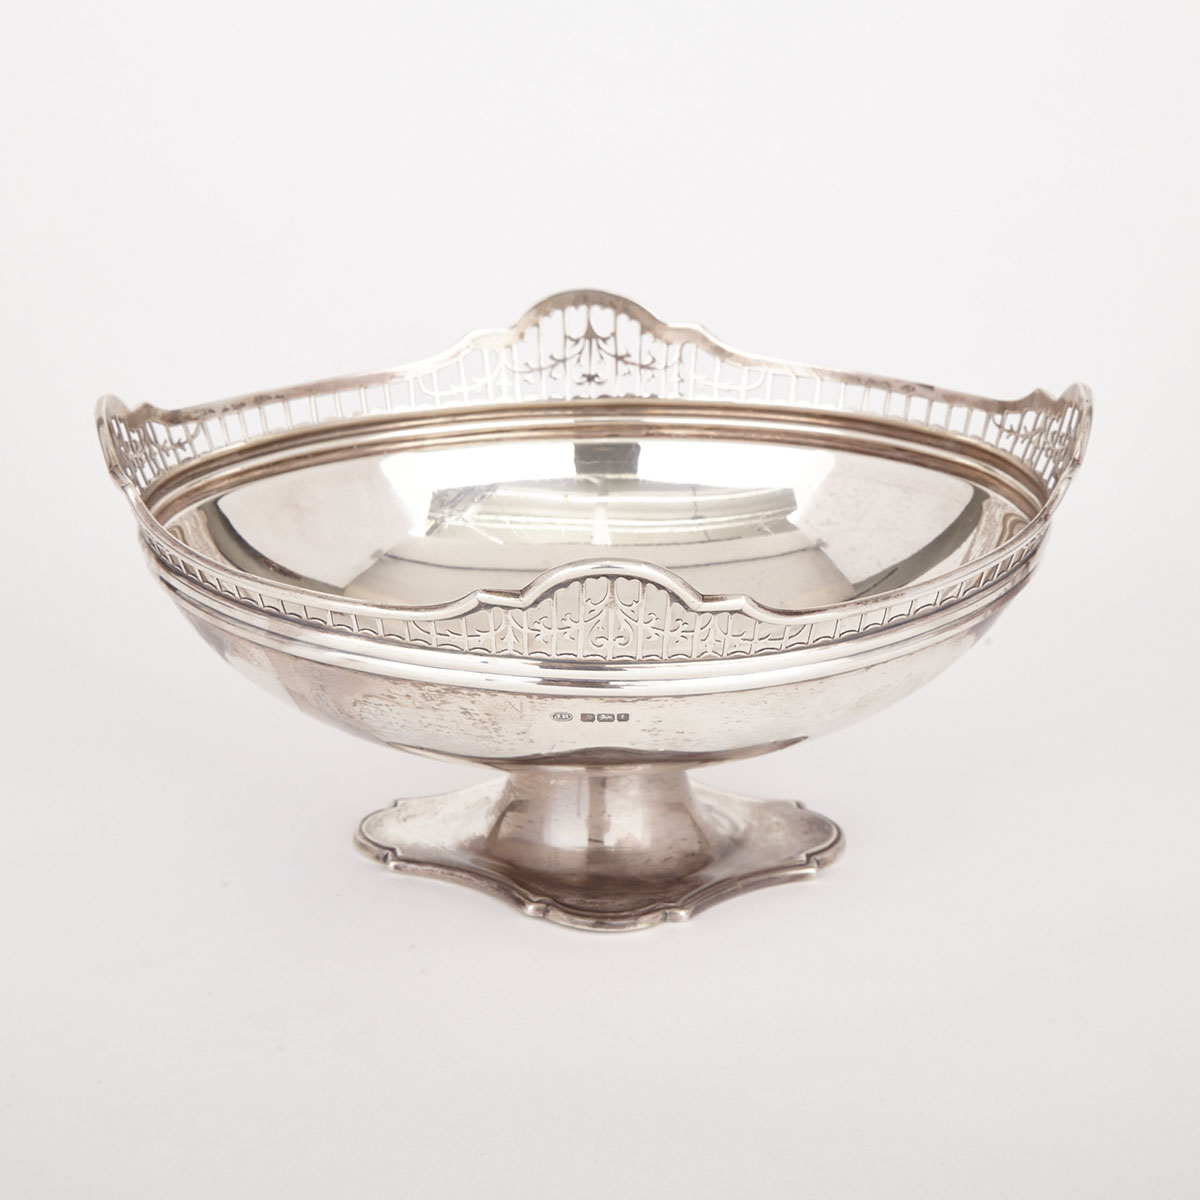 English Silver Oval Fruit Bowl, John Round & Son Ltd., Sheffield, 1911